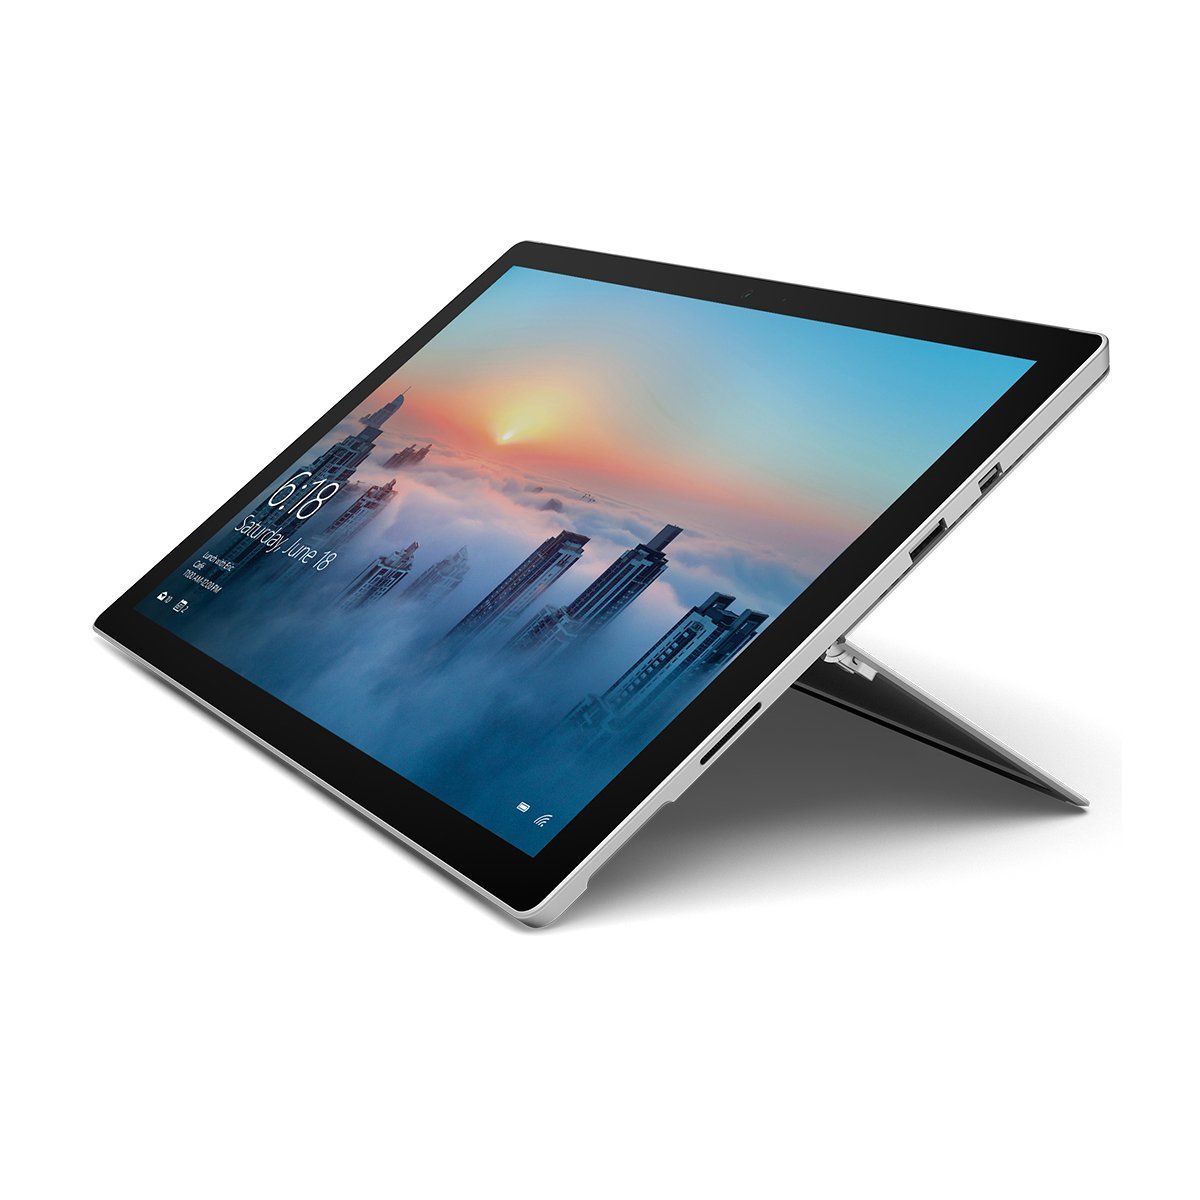 Microsoft Surface Pro 4 Intel Core i5-6300U 2.40GHz - 4GB RAM - 128 GB SSD Tablet Windows 10 Pro, Refurbished